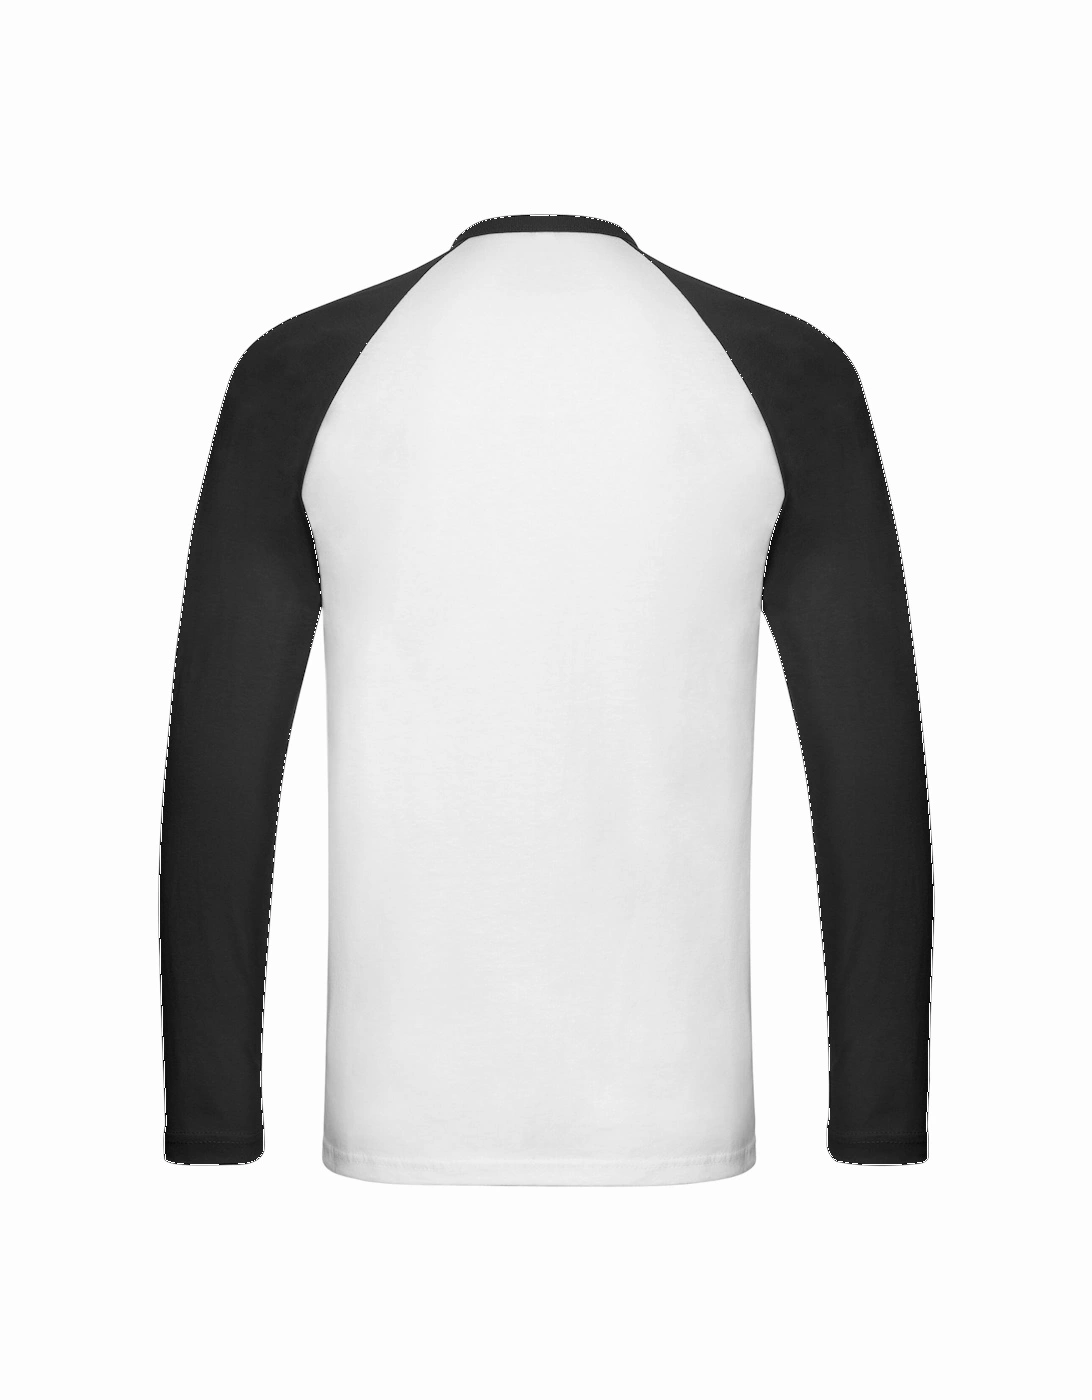 Unisex Adult Contrast Long-Sleeved Baseball T-Shirt